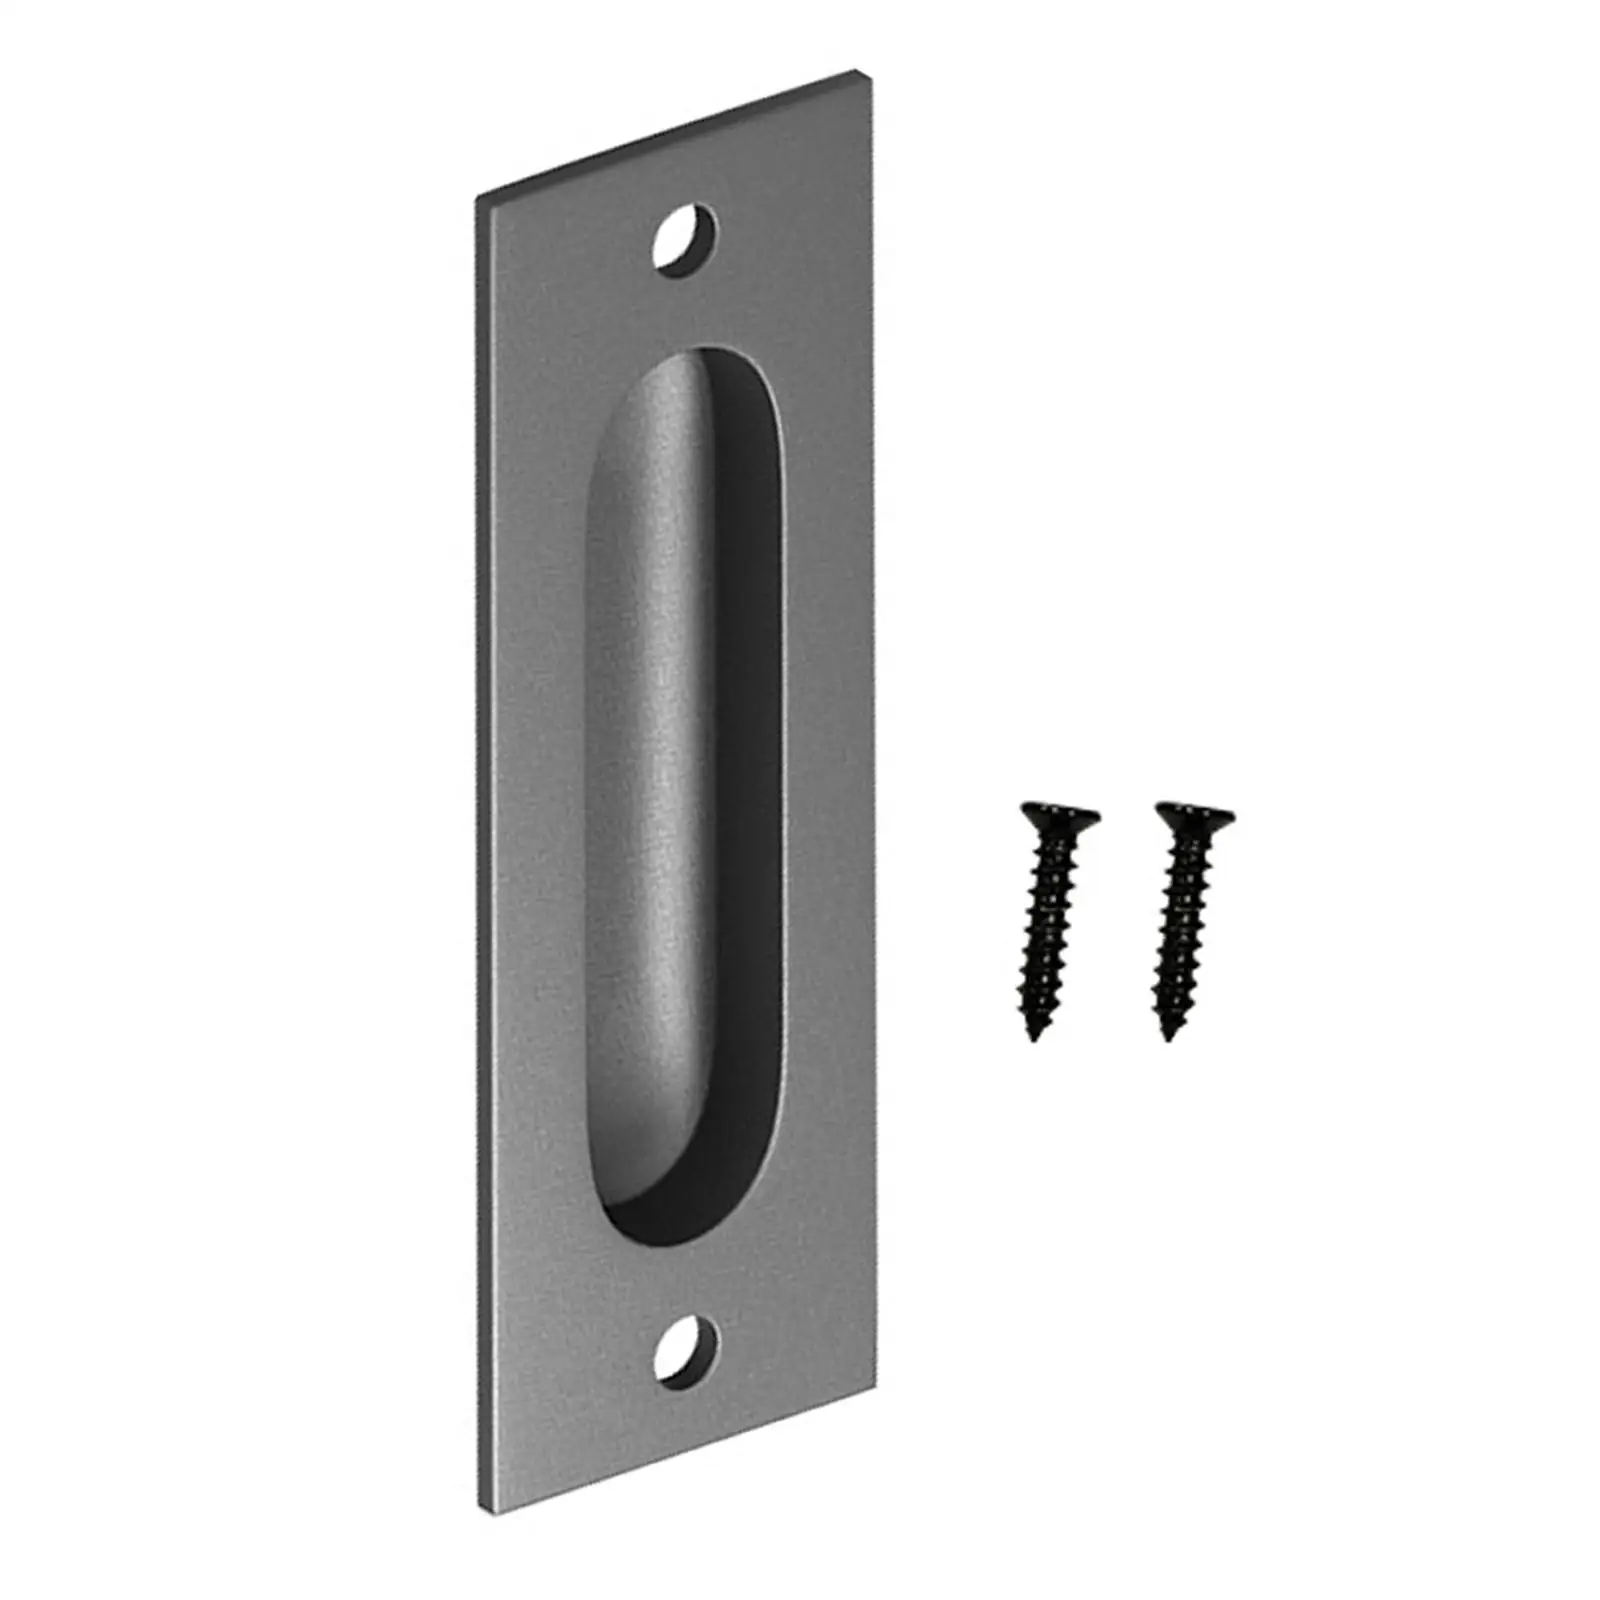 Matte Black Embedded Sliding Door Handle Flush Pull Handle Rectangular Recessed Heavy Duty for Wardrobe Cupboard Drawers